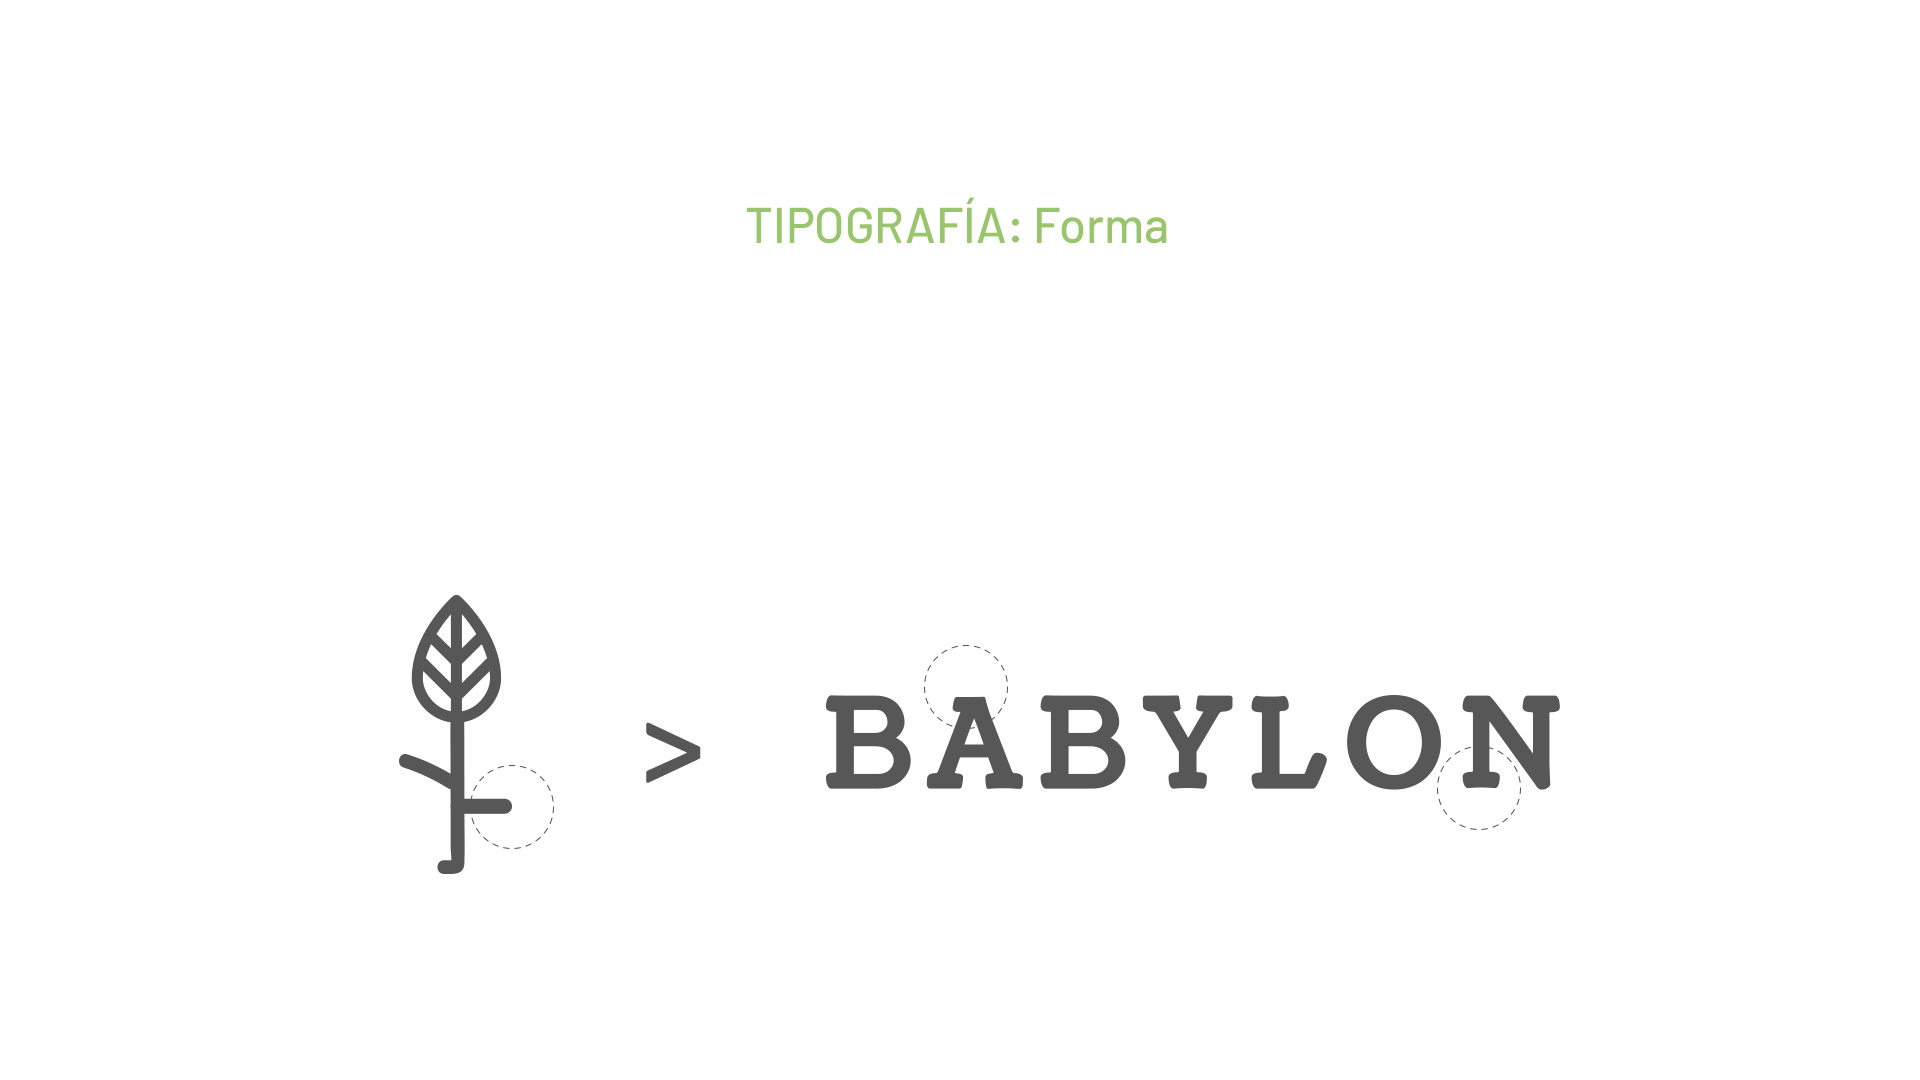 babylon-portafolio-identidad-1920x1080px-dopamine-brands-05